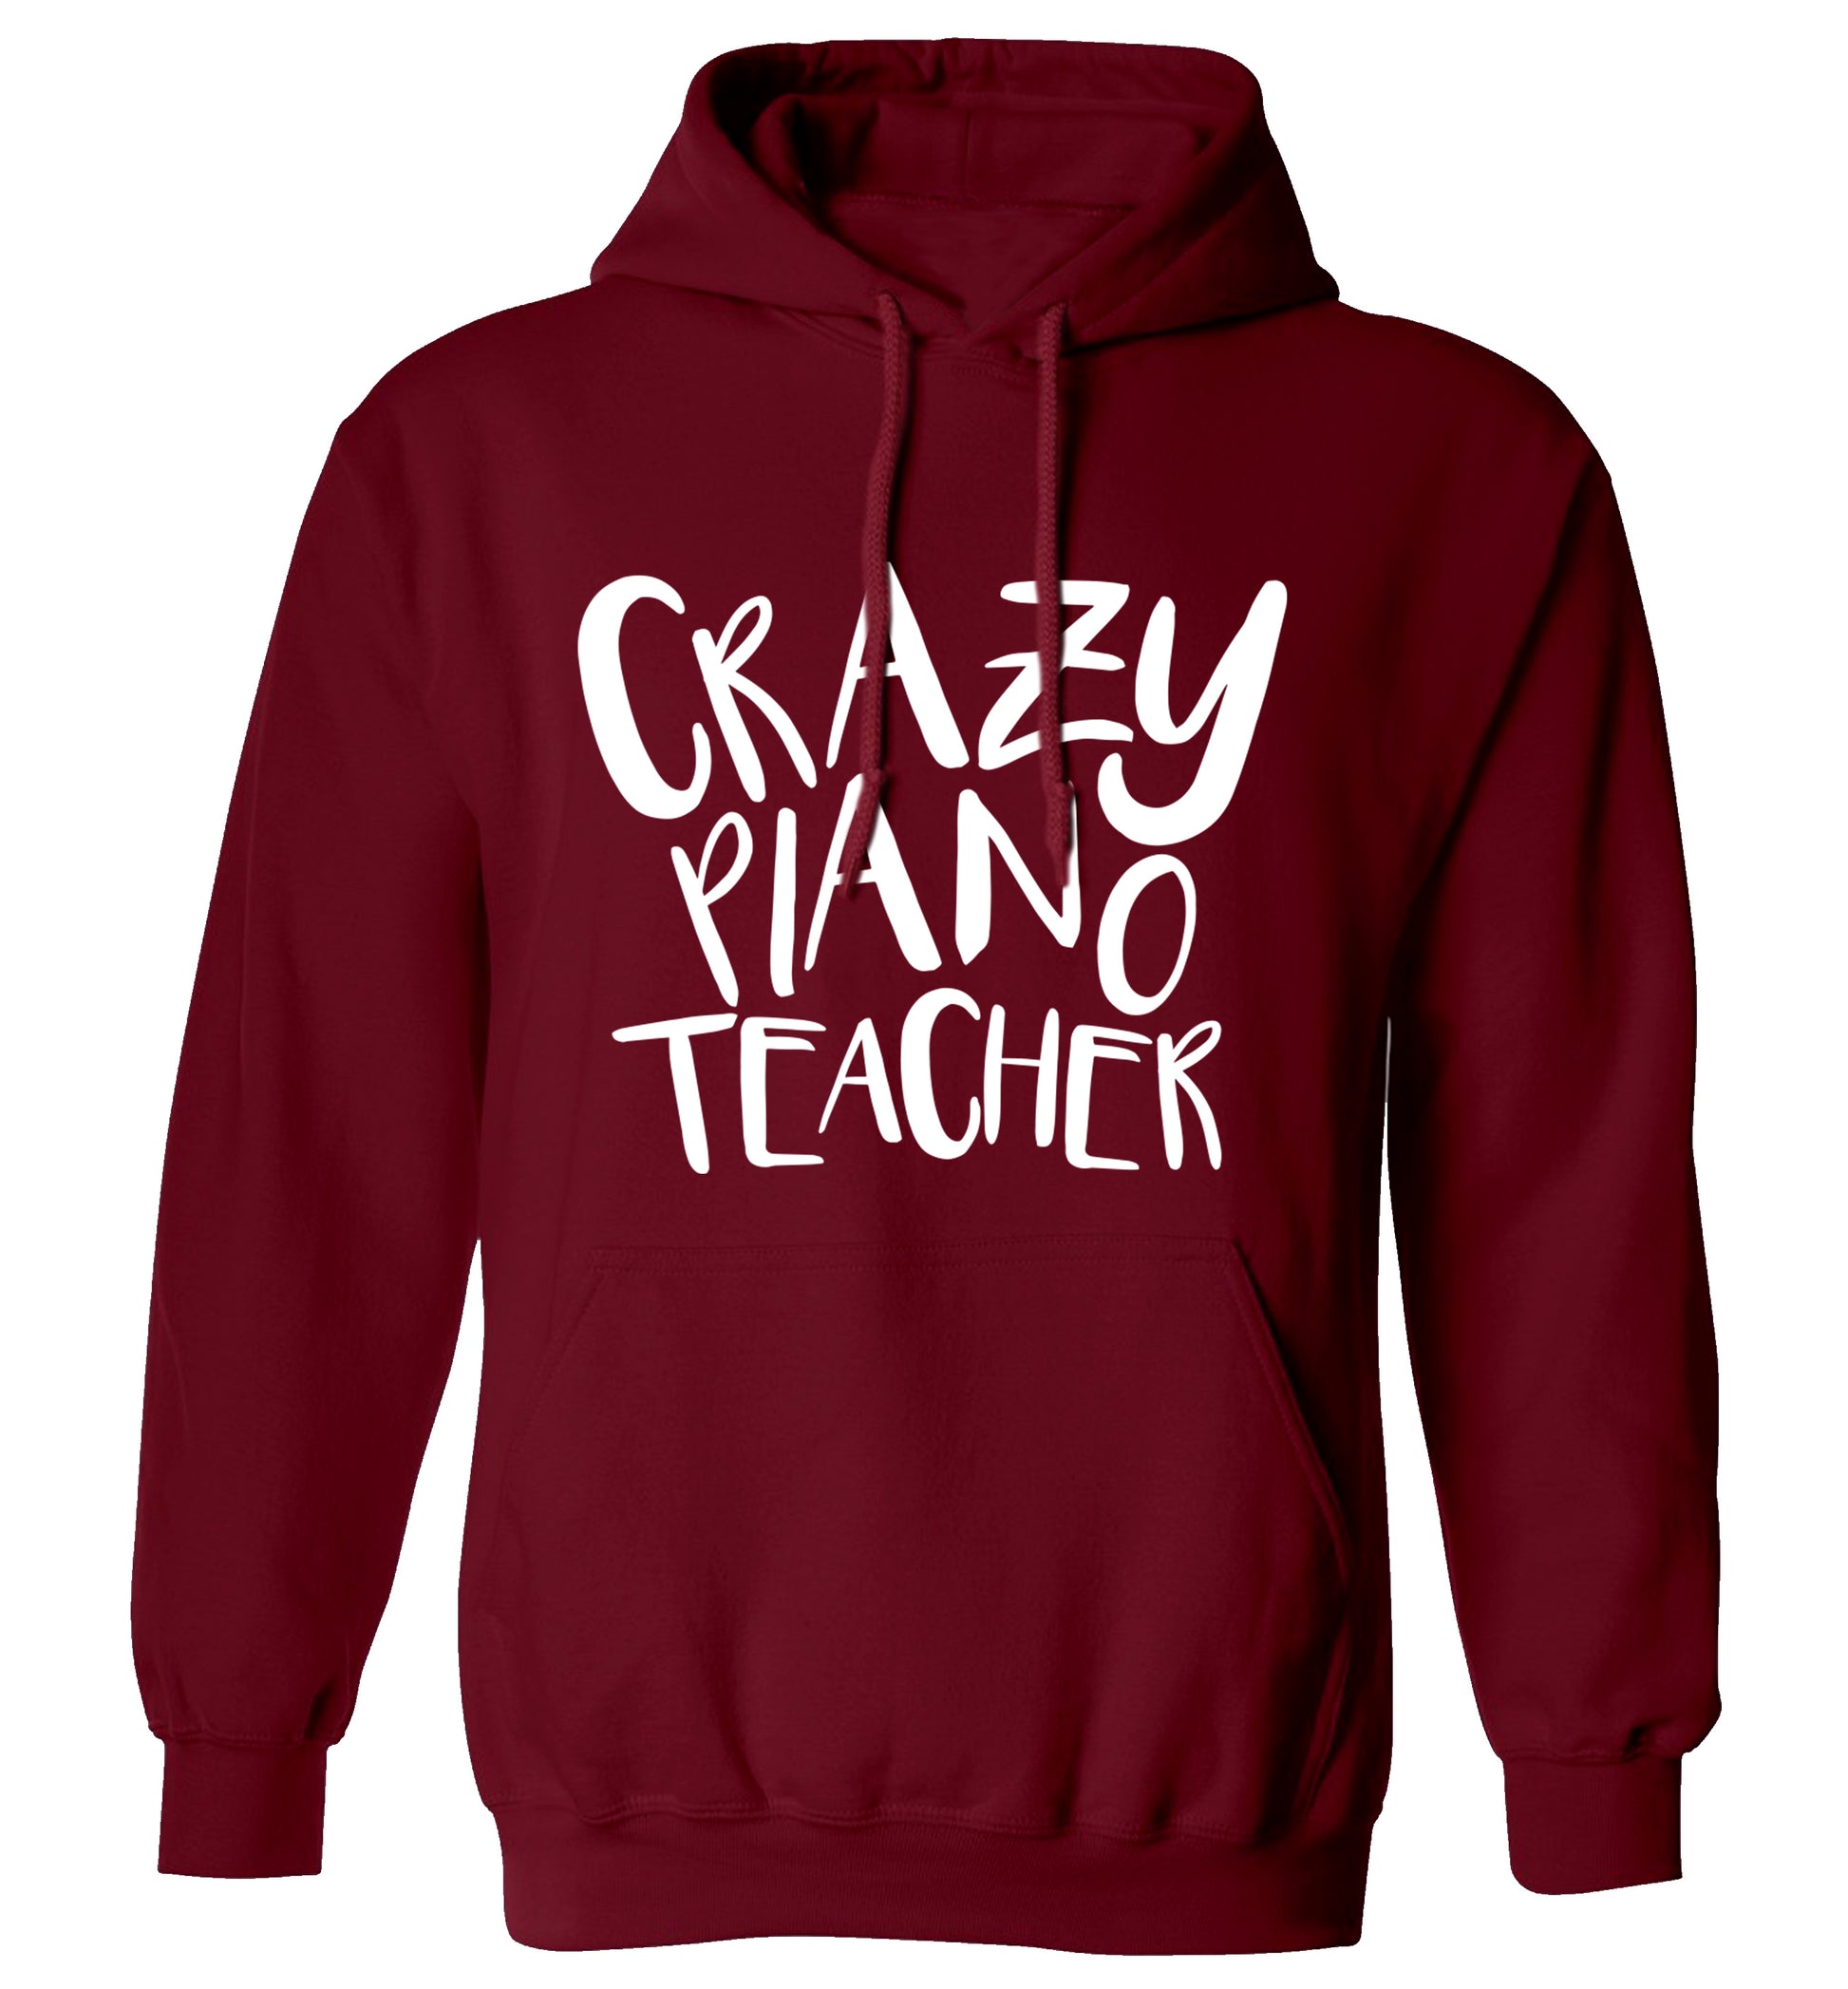 Crazy piano teacher adults unisex maroon hoodie 2XL